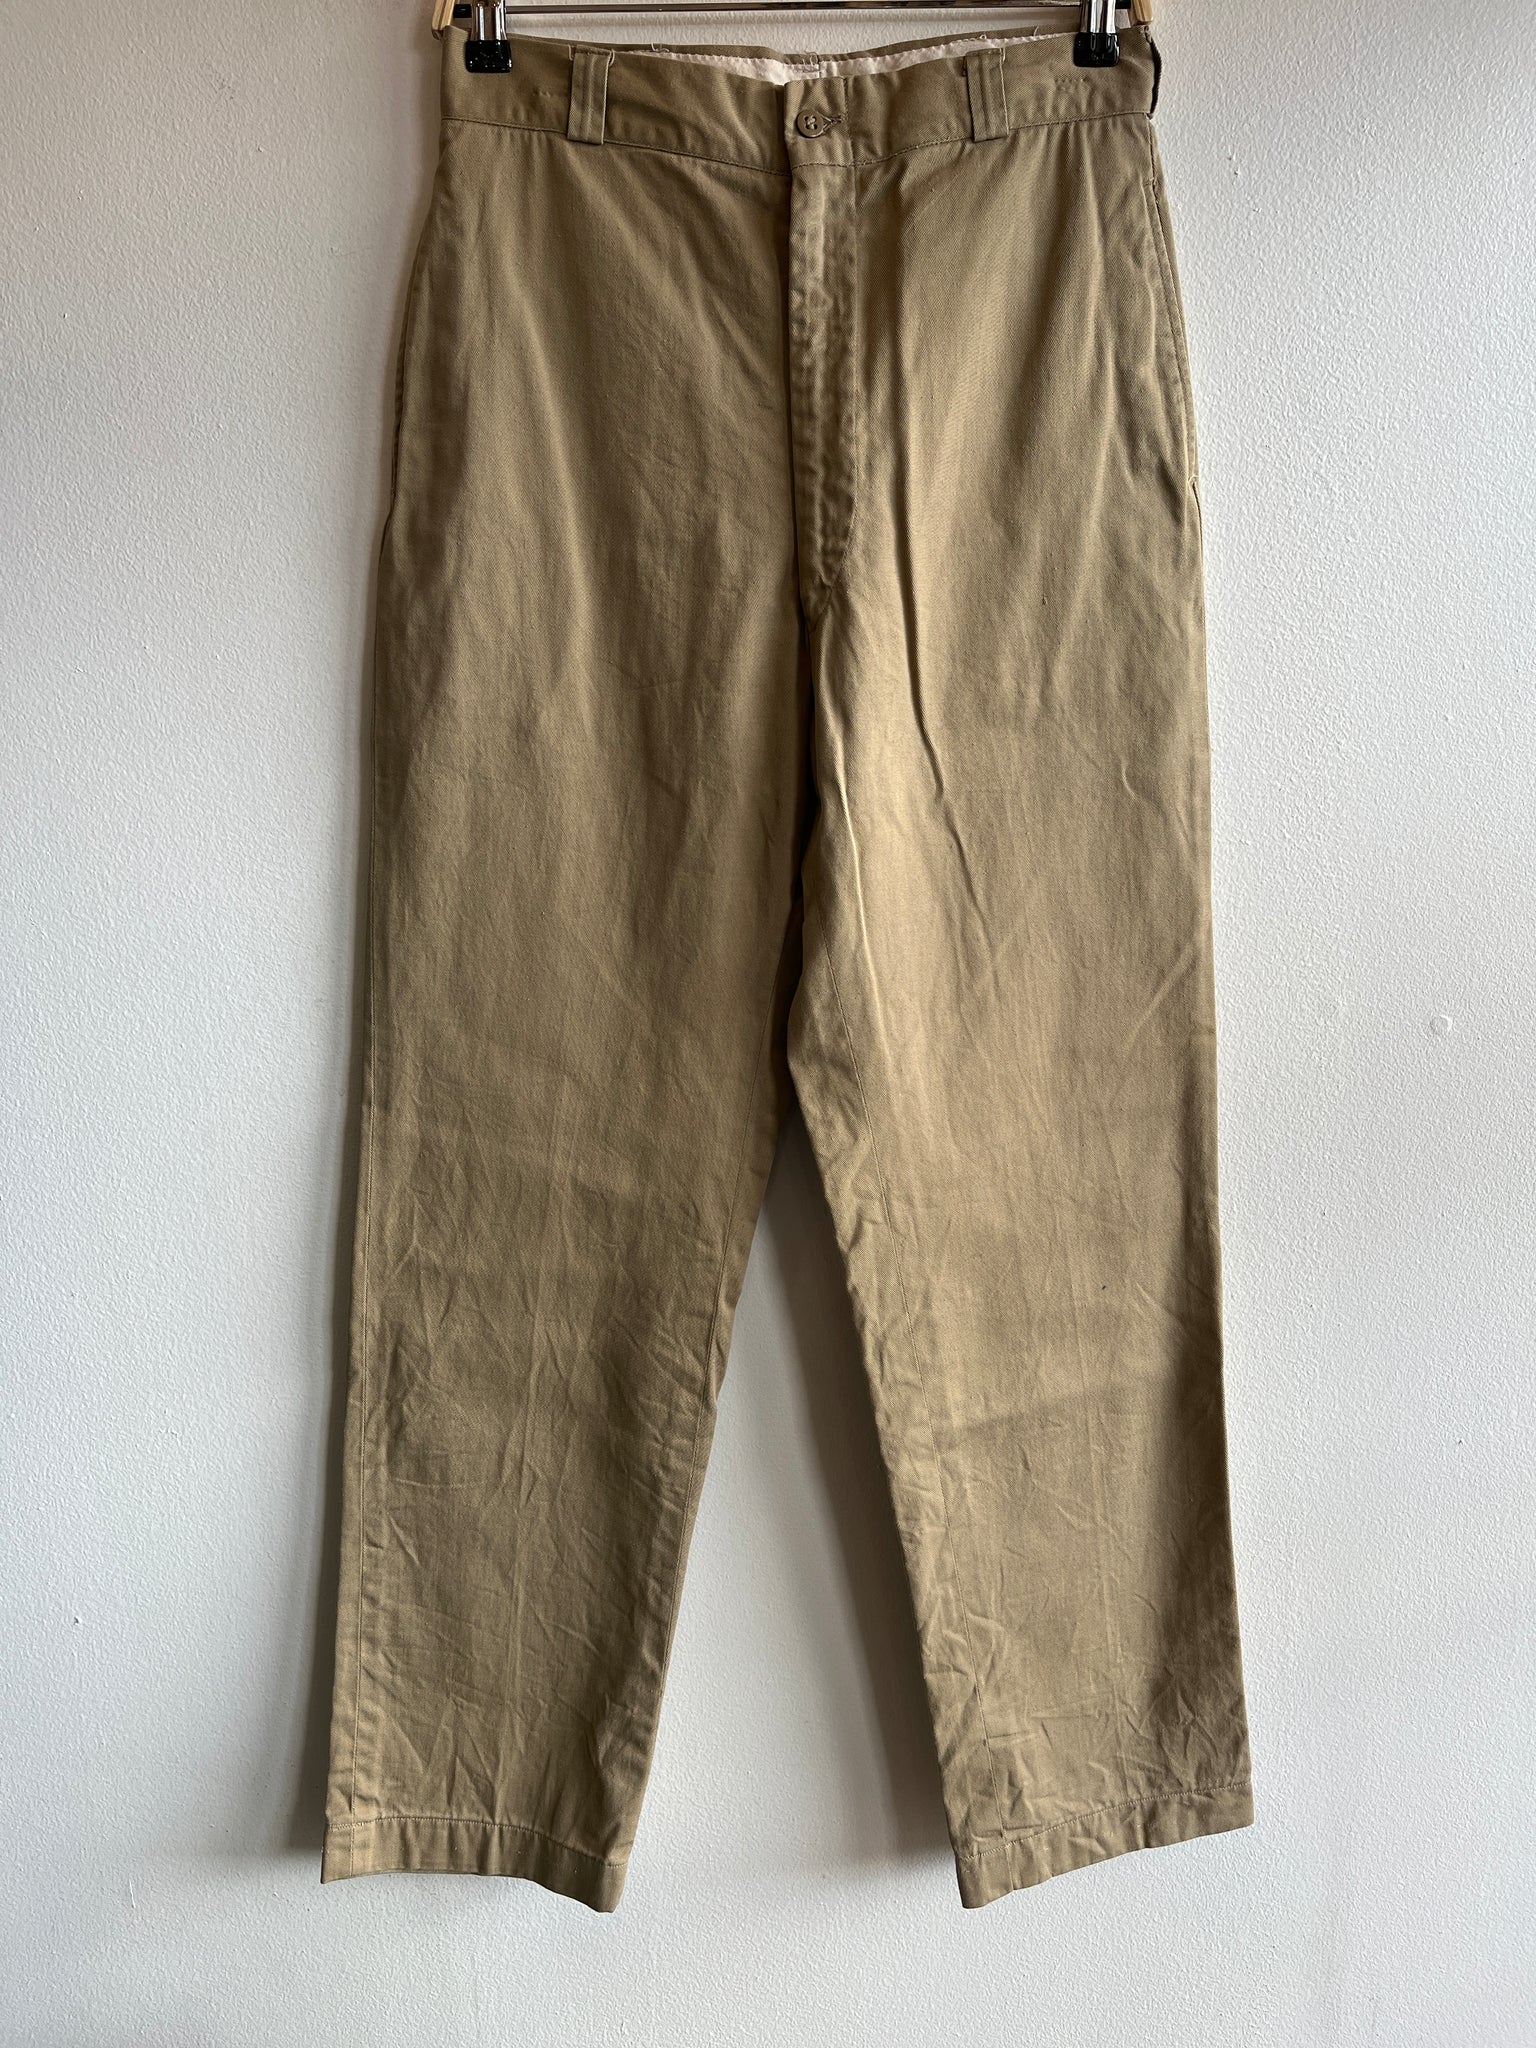 Vintage 1960/1970’s Khaki Military Trousers